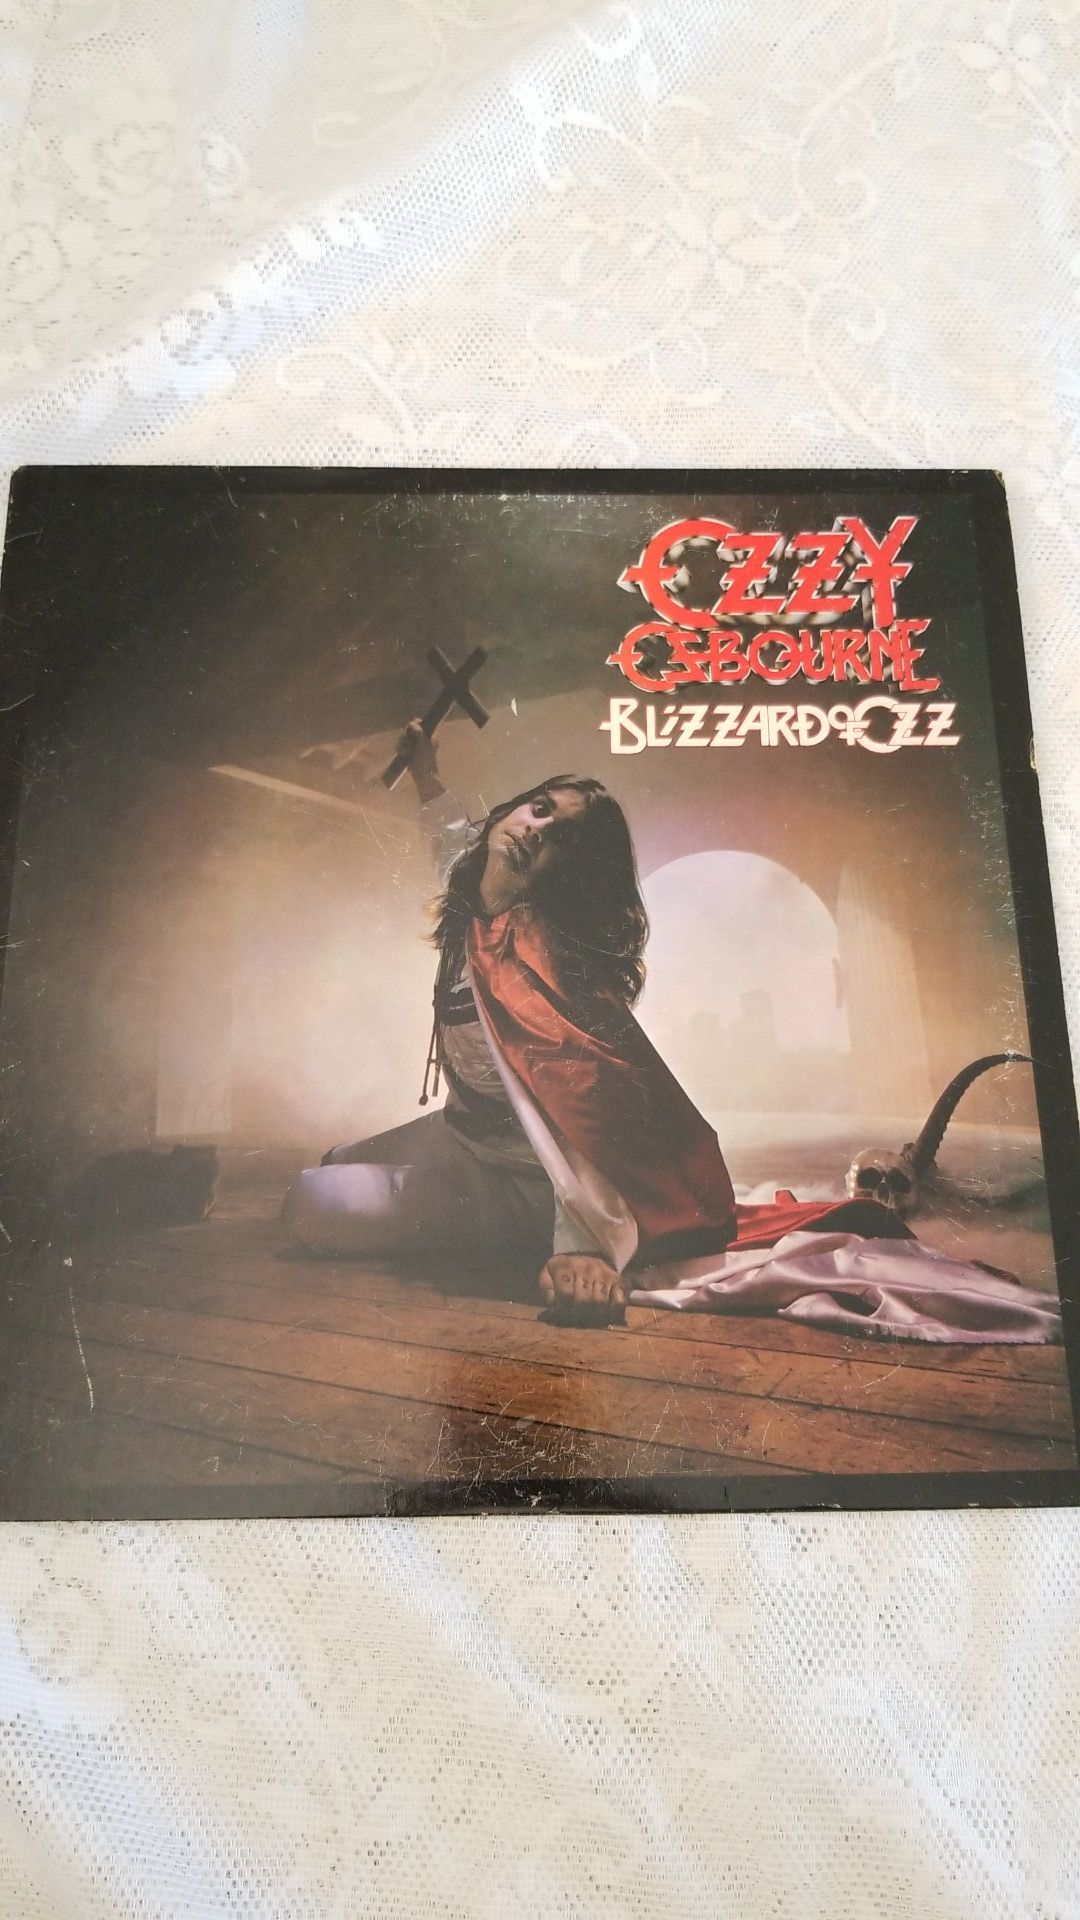 OZZY OSBOURNE BLIZZARD OF OZZ VINYL LP RECORD ALBUM